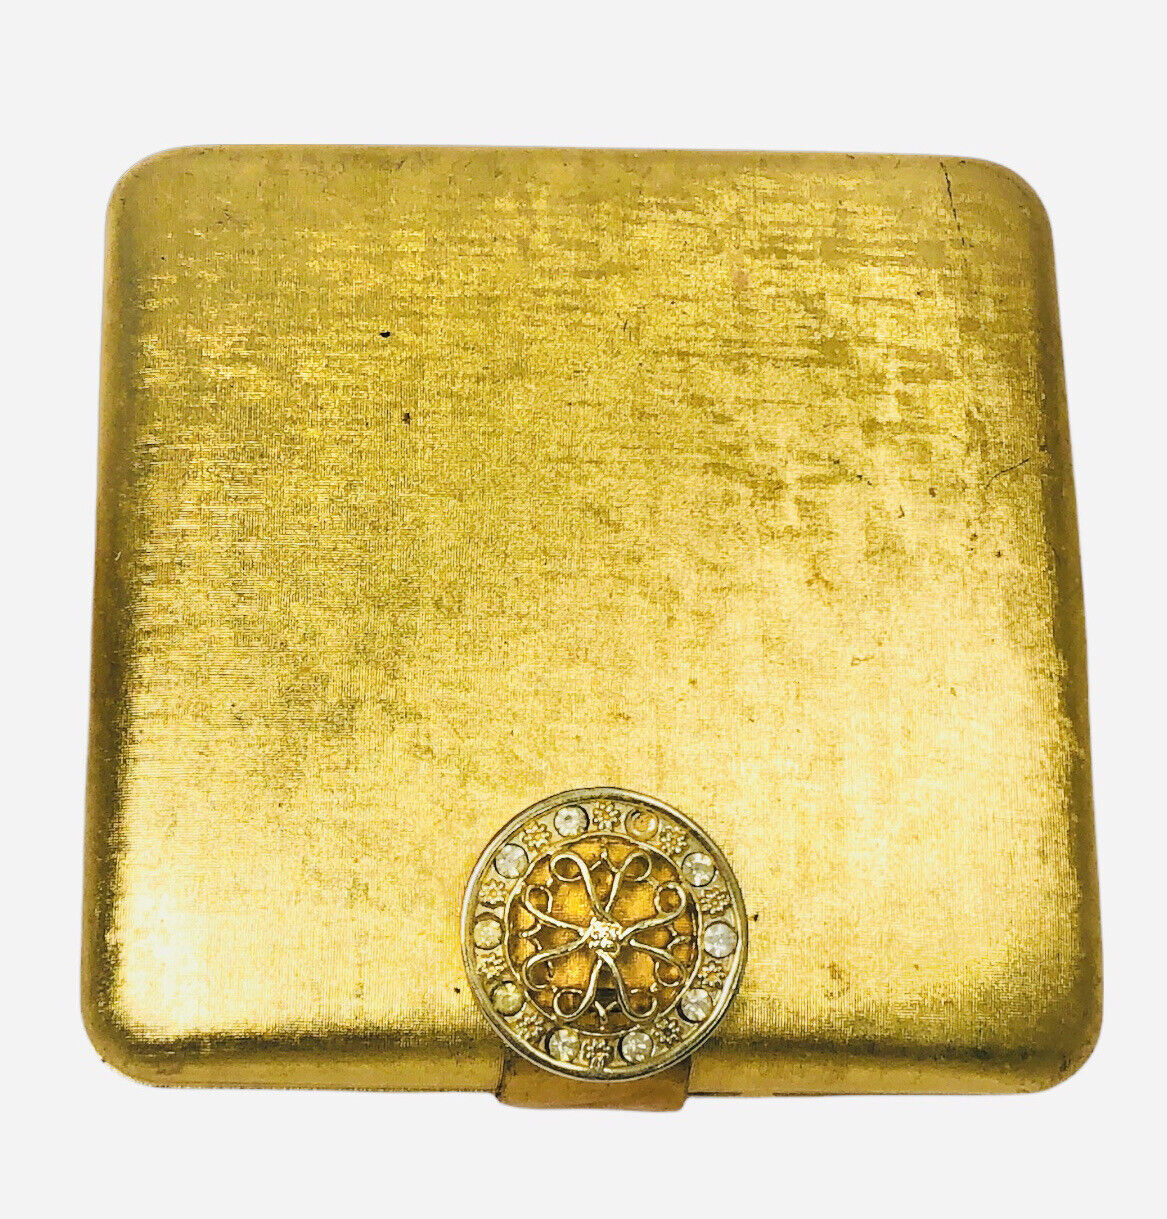 AVON Ladies Powder Compact Gold -Toned with Unique Rhinestone Clasp #116